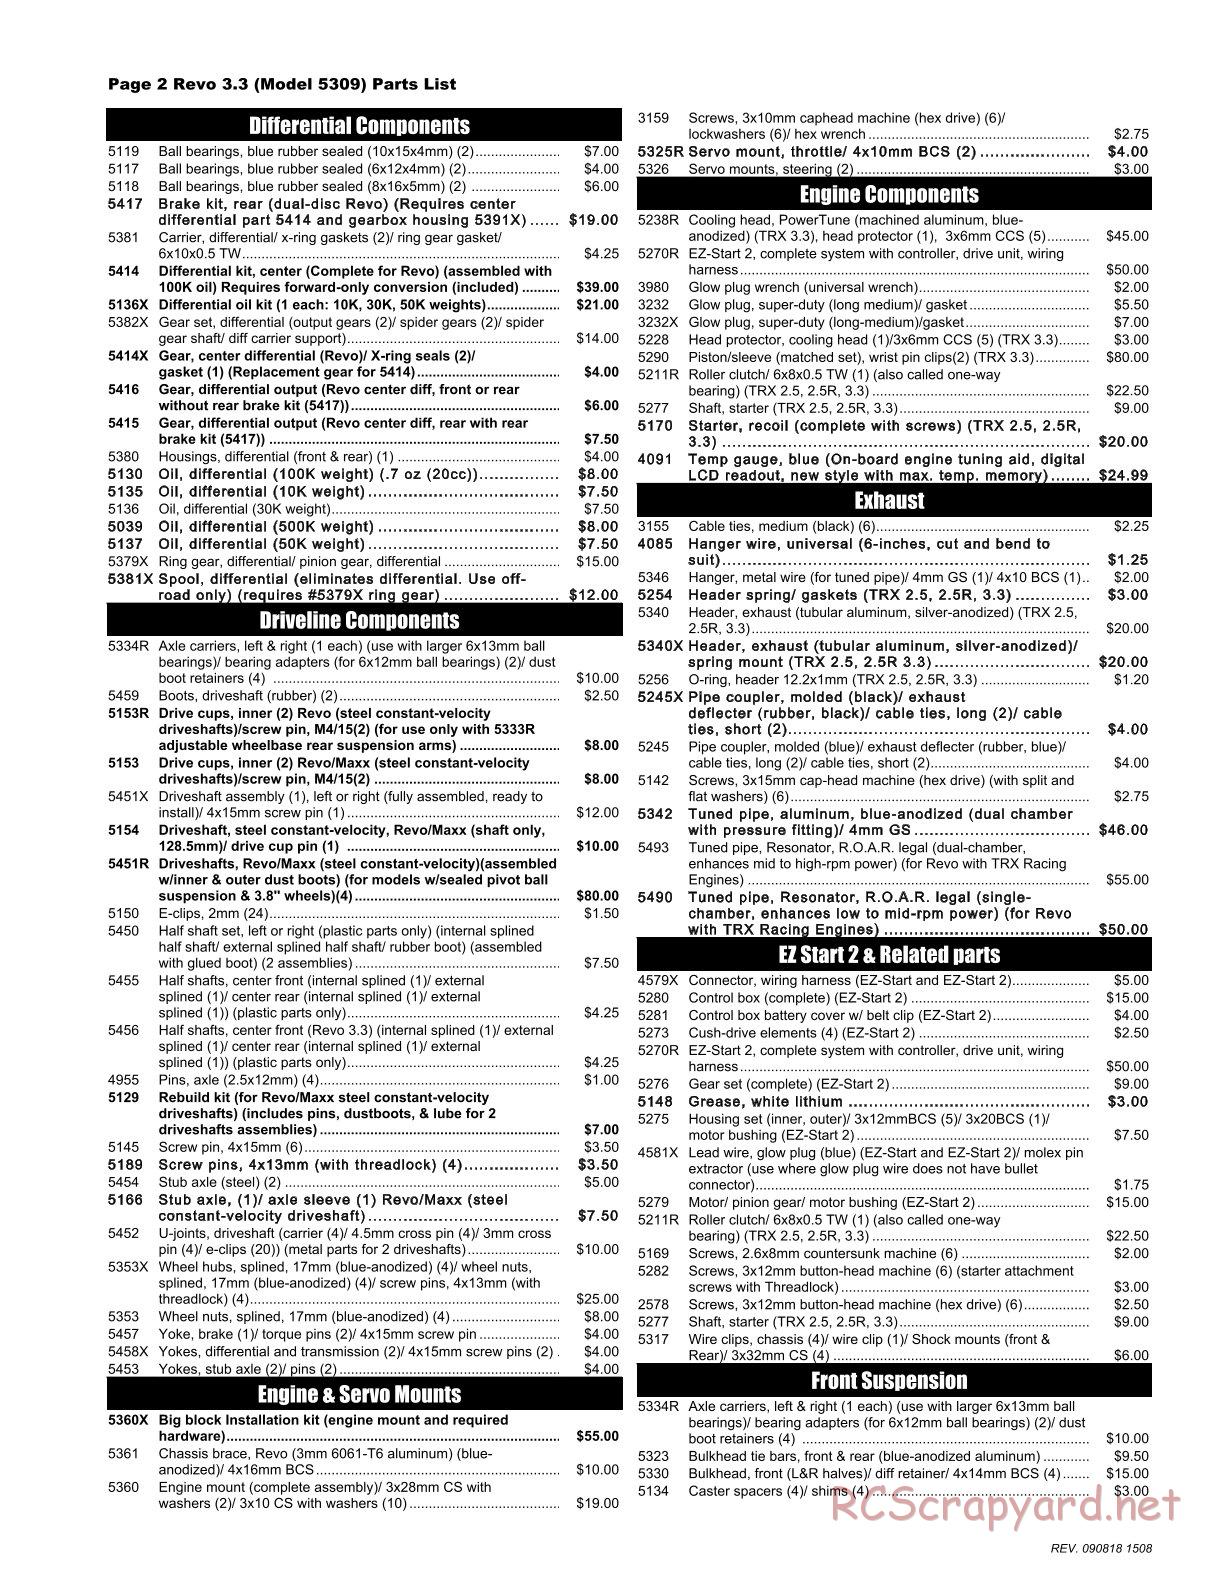 Traxxas - Revo 3.3 - Parts List - Page 2